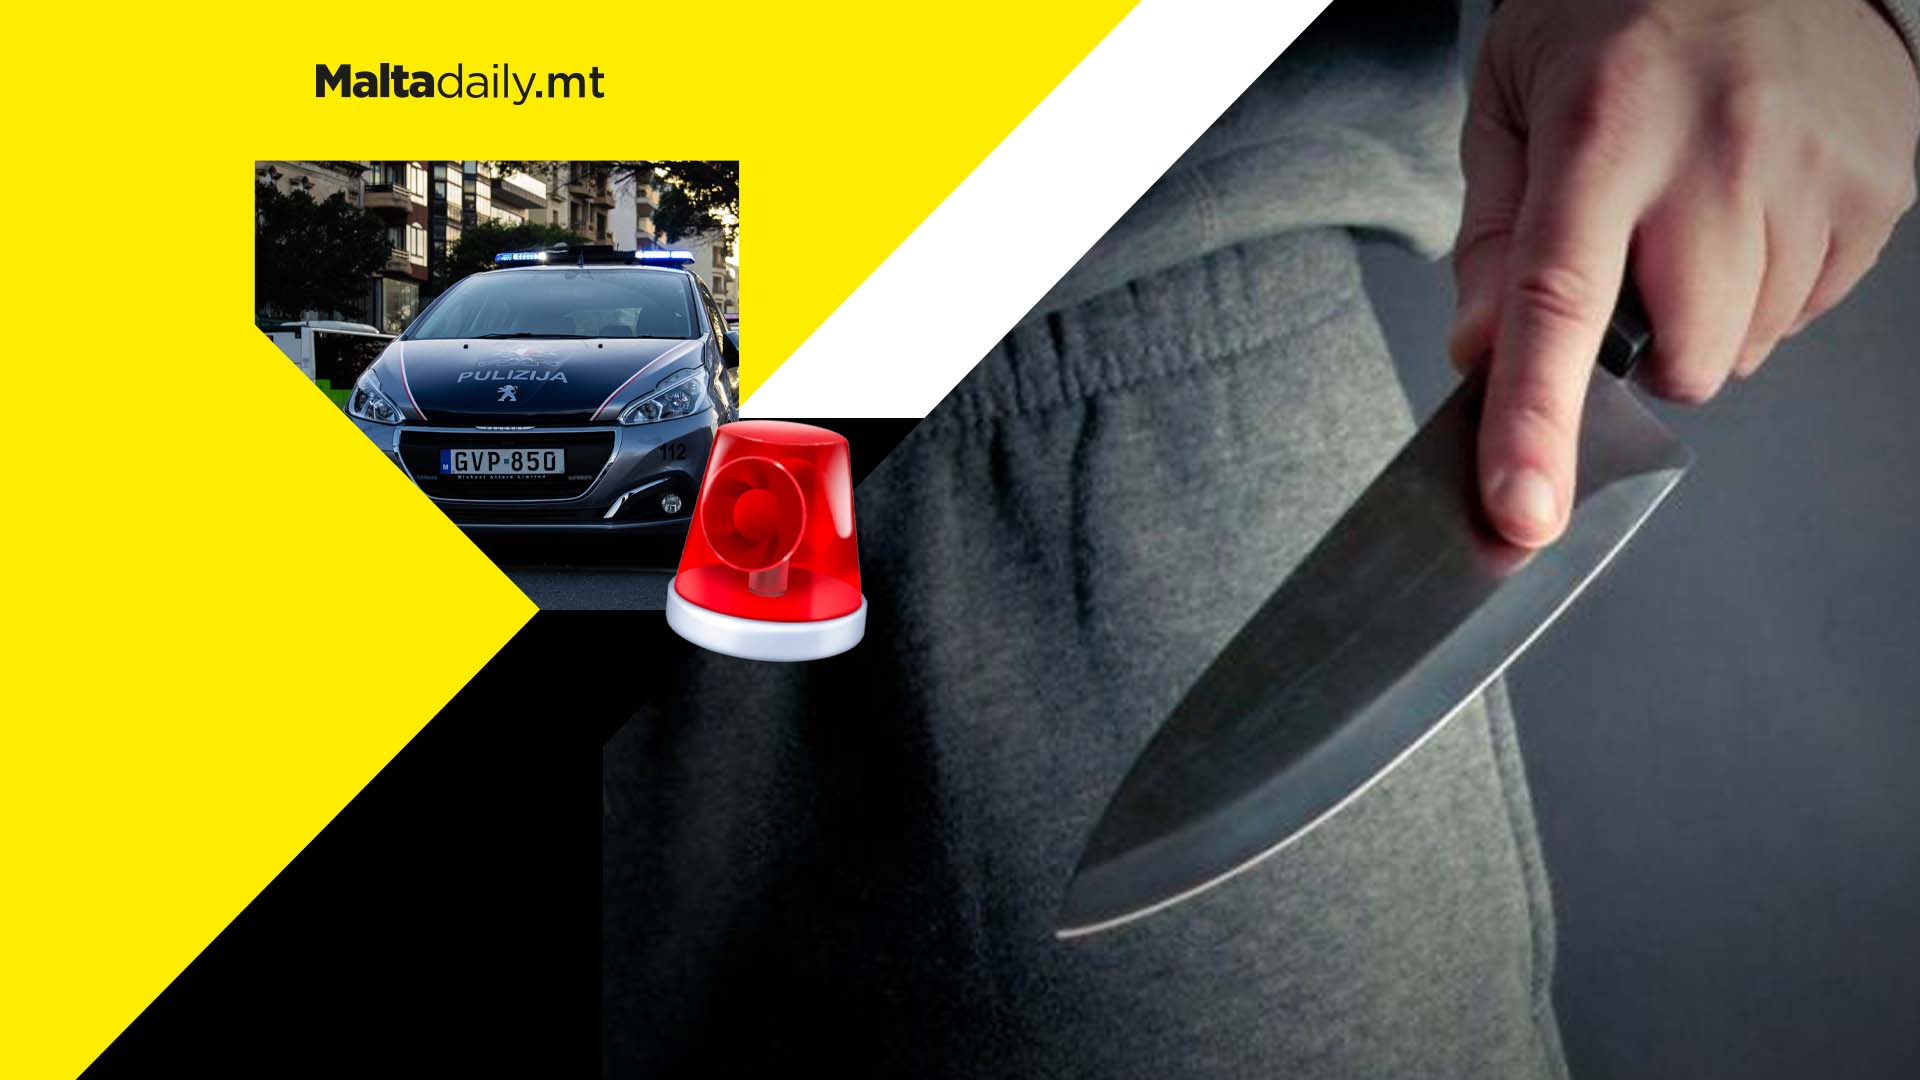 Man arrested after knife attack outside Naxxar building